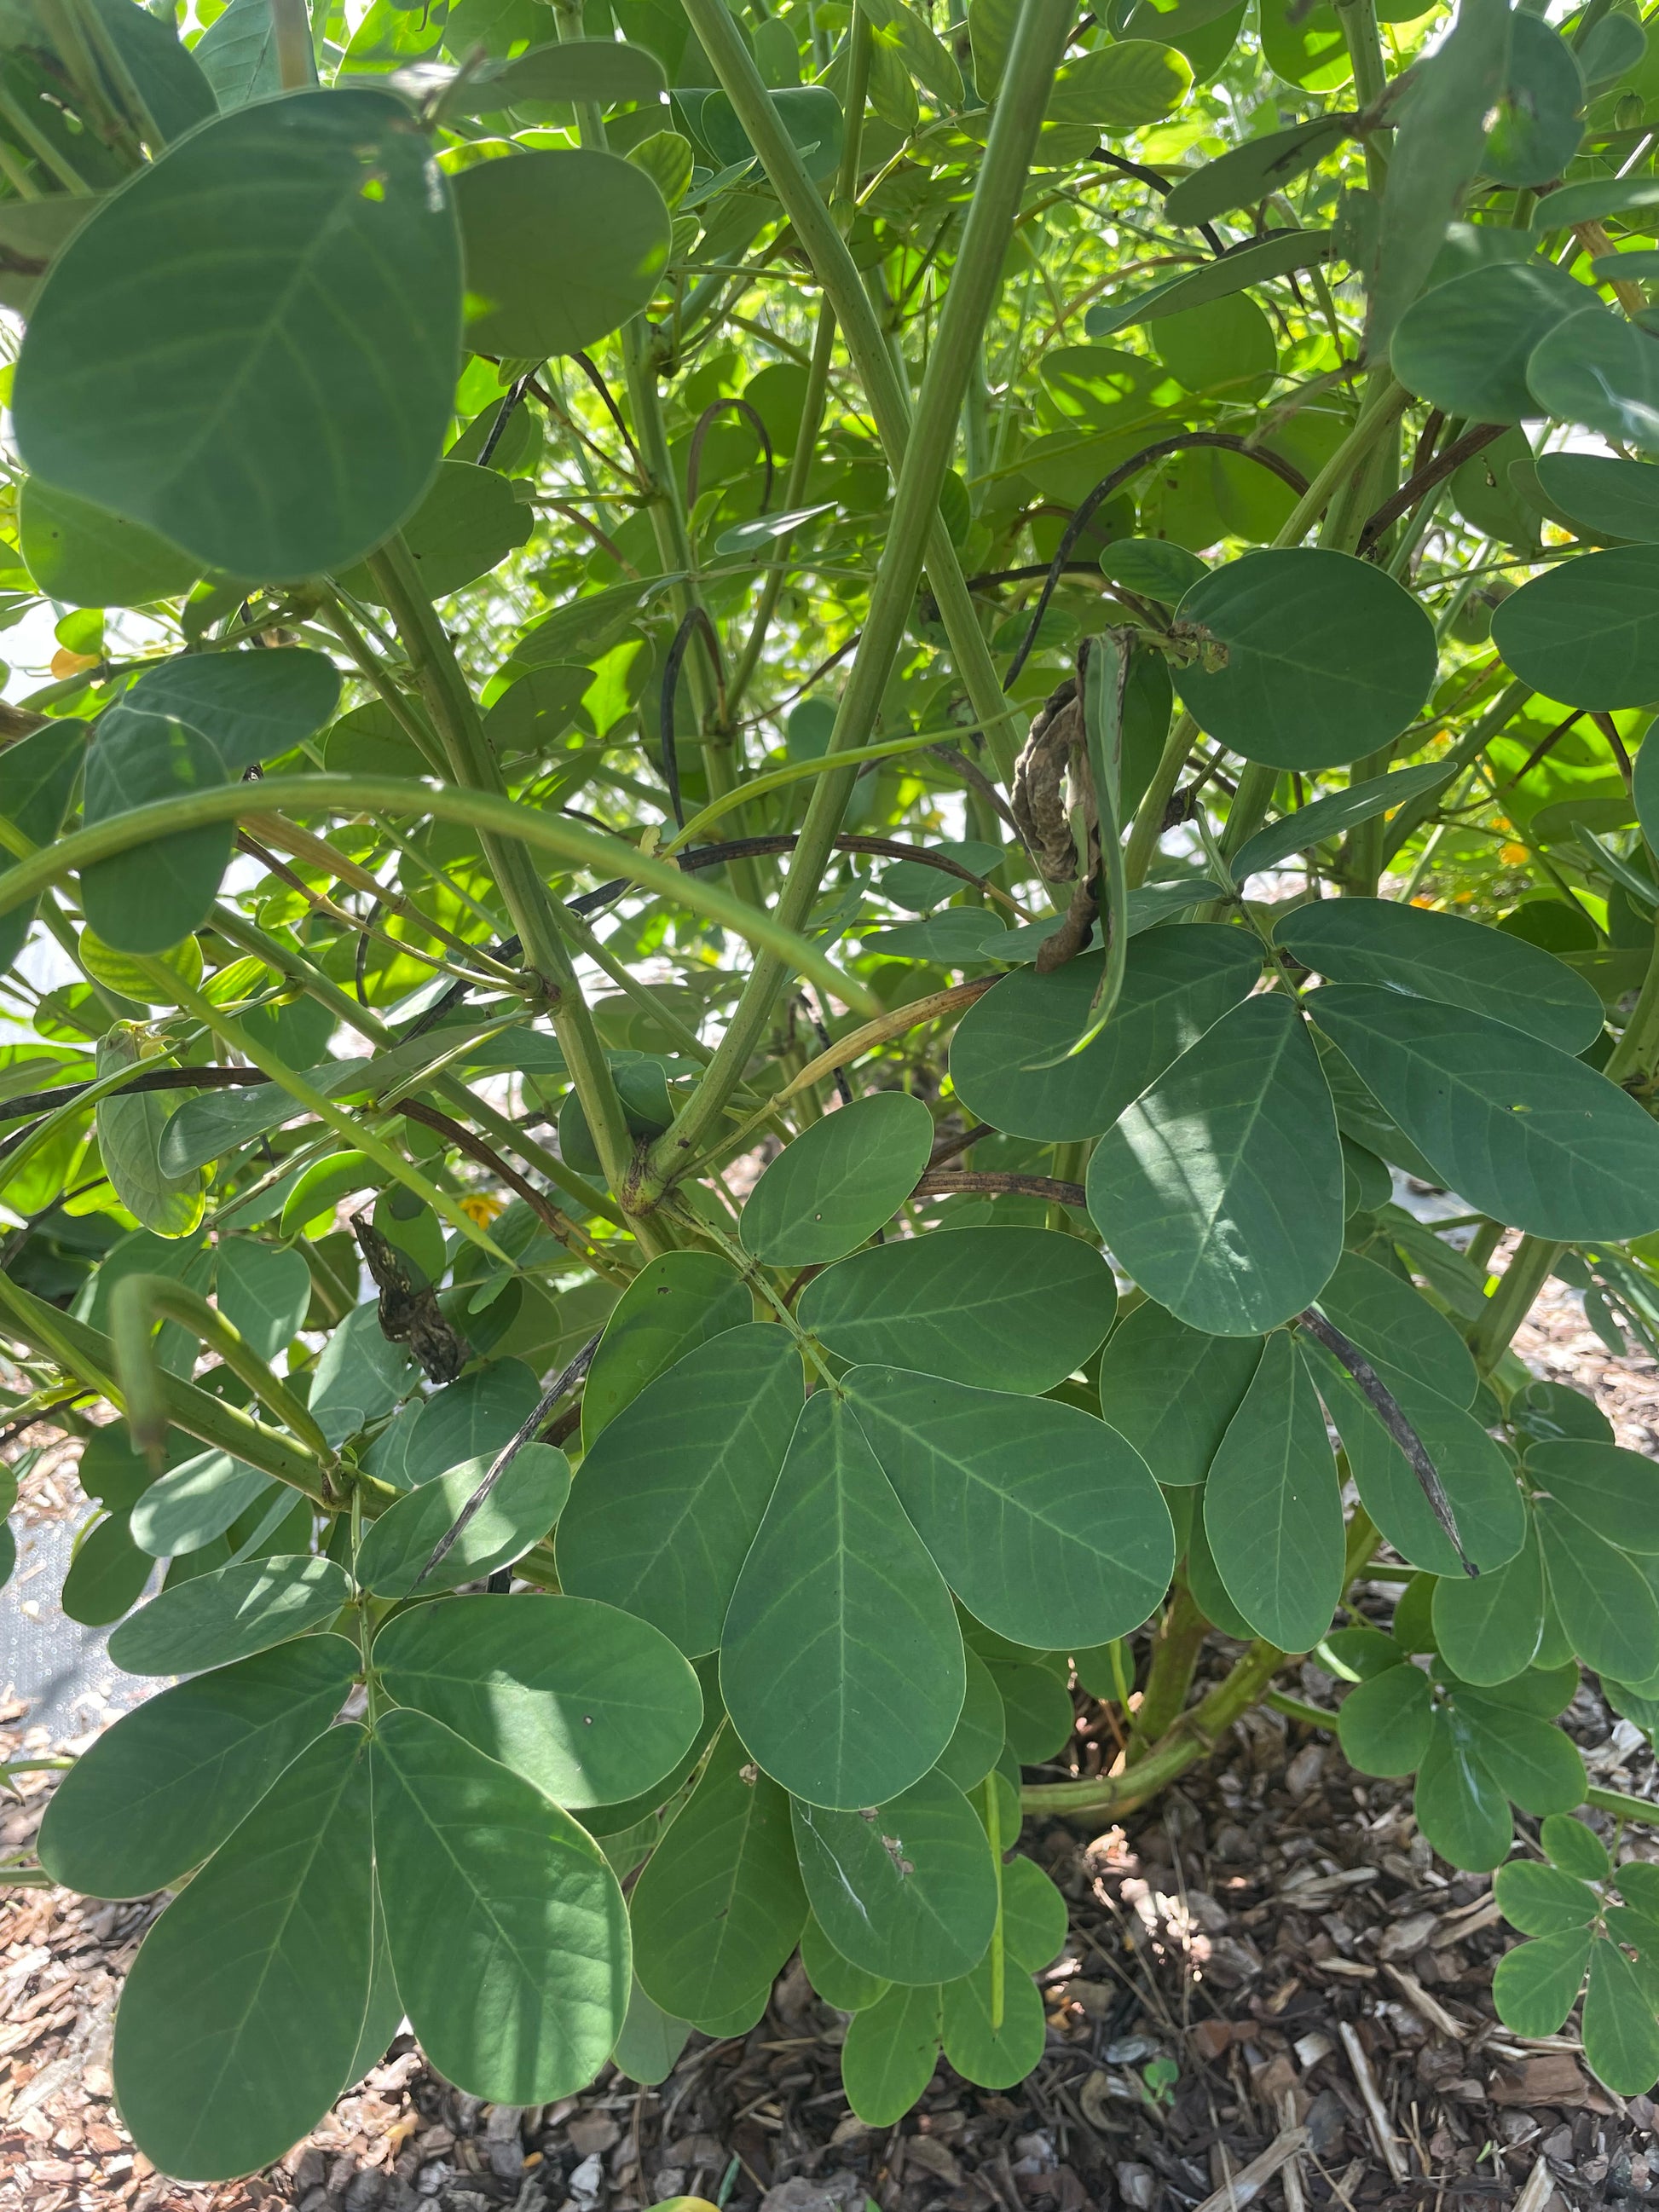 Senna obtusifolia " sicklepod" leaf is host plant for sulphur butterflies